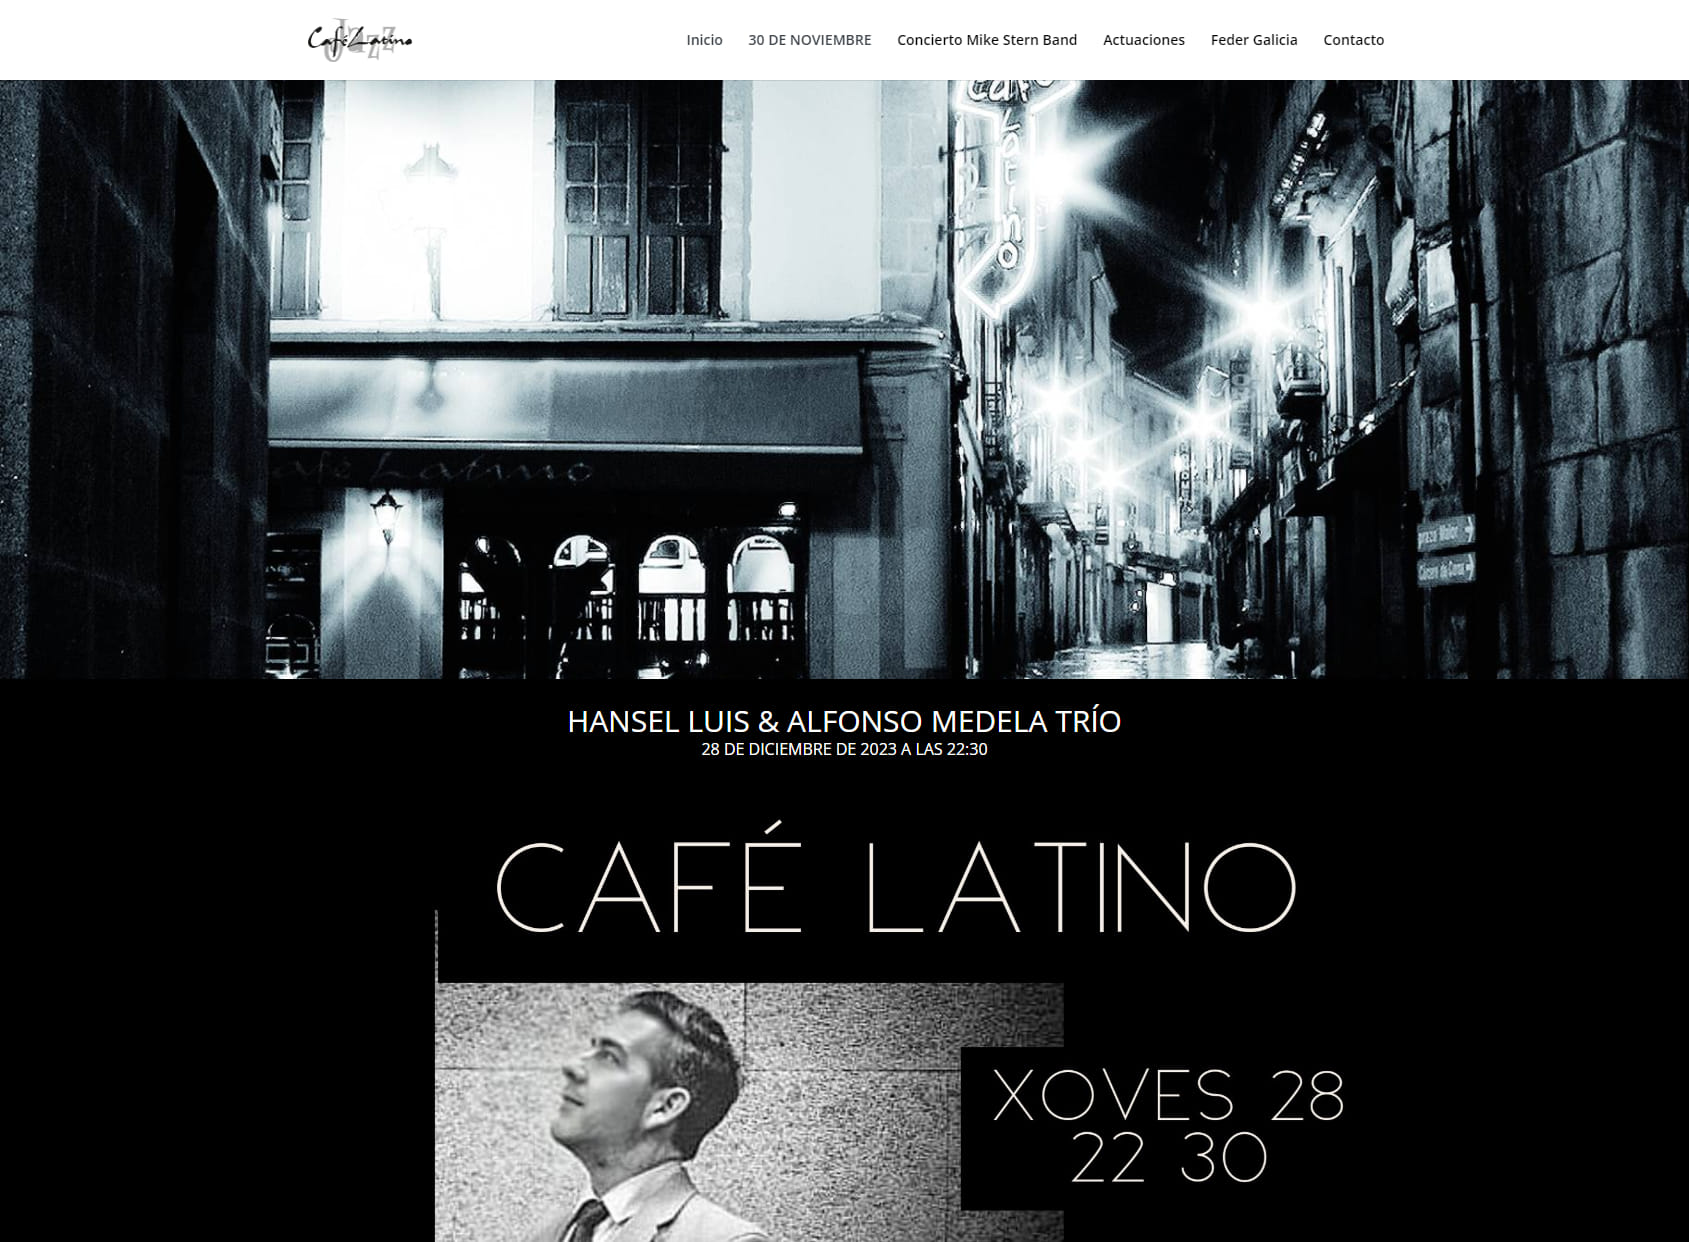 Café Latino